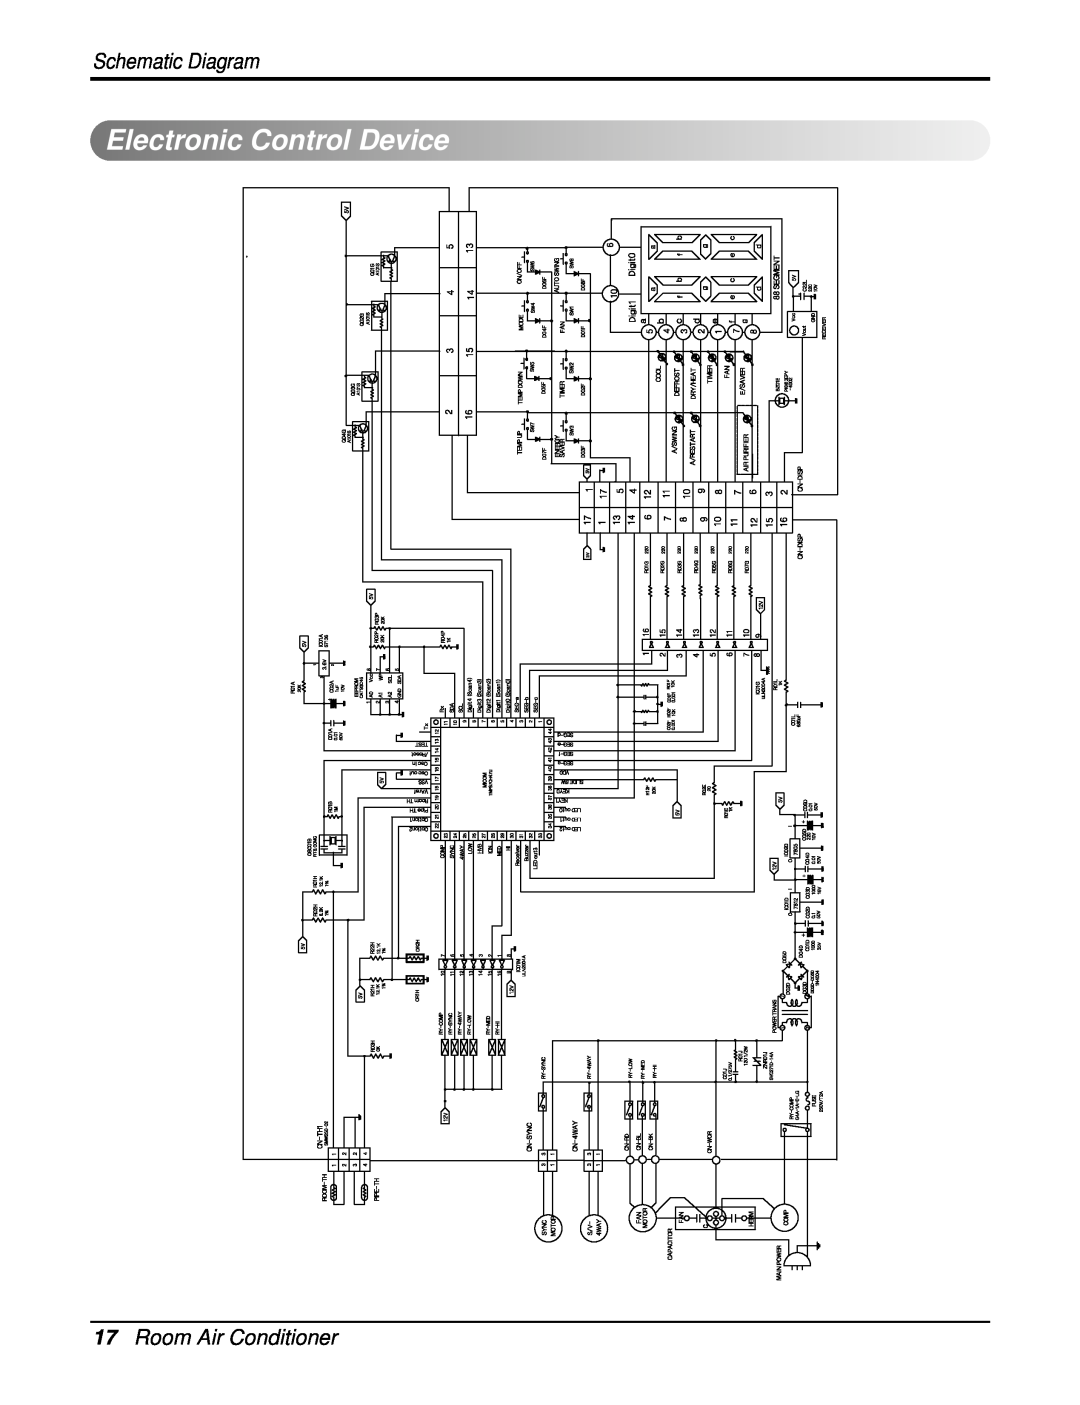 Friedrich CP12E10, CP10E10 manual ElectronicControl Device, 17Room Air Conditioner, Schematic Diagram 